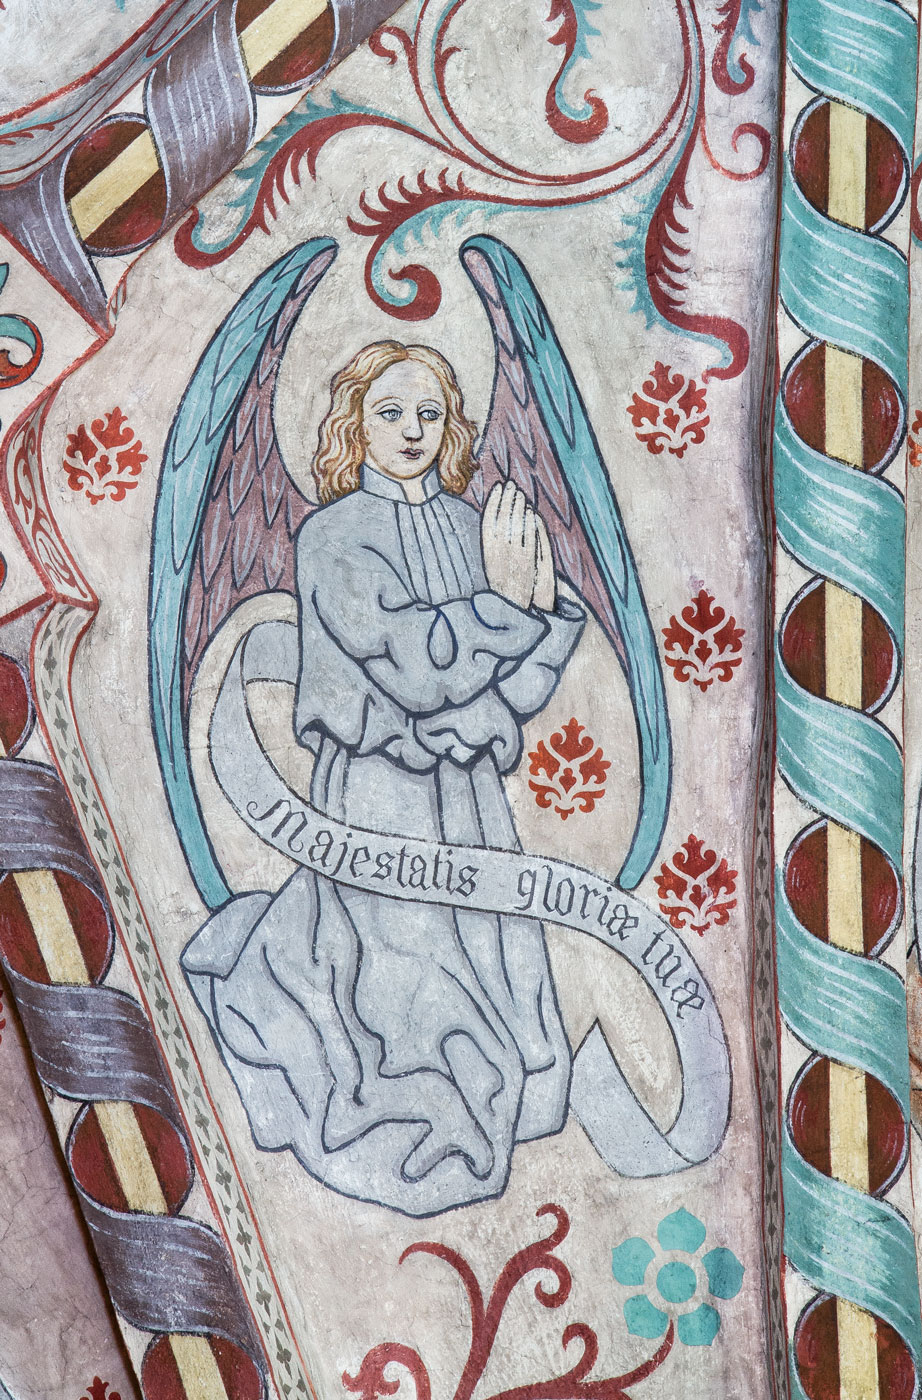 En av åtta änglar med hymnen Te Deum uppdelad på åtta språkband: Majestatis gloriae tuae (Ö) - Vittinge kyrka